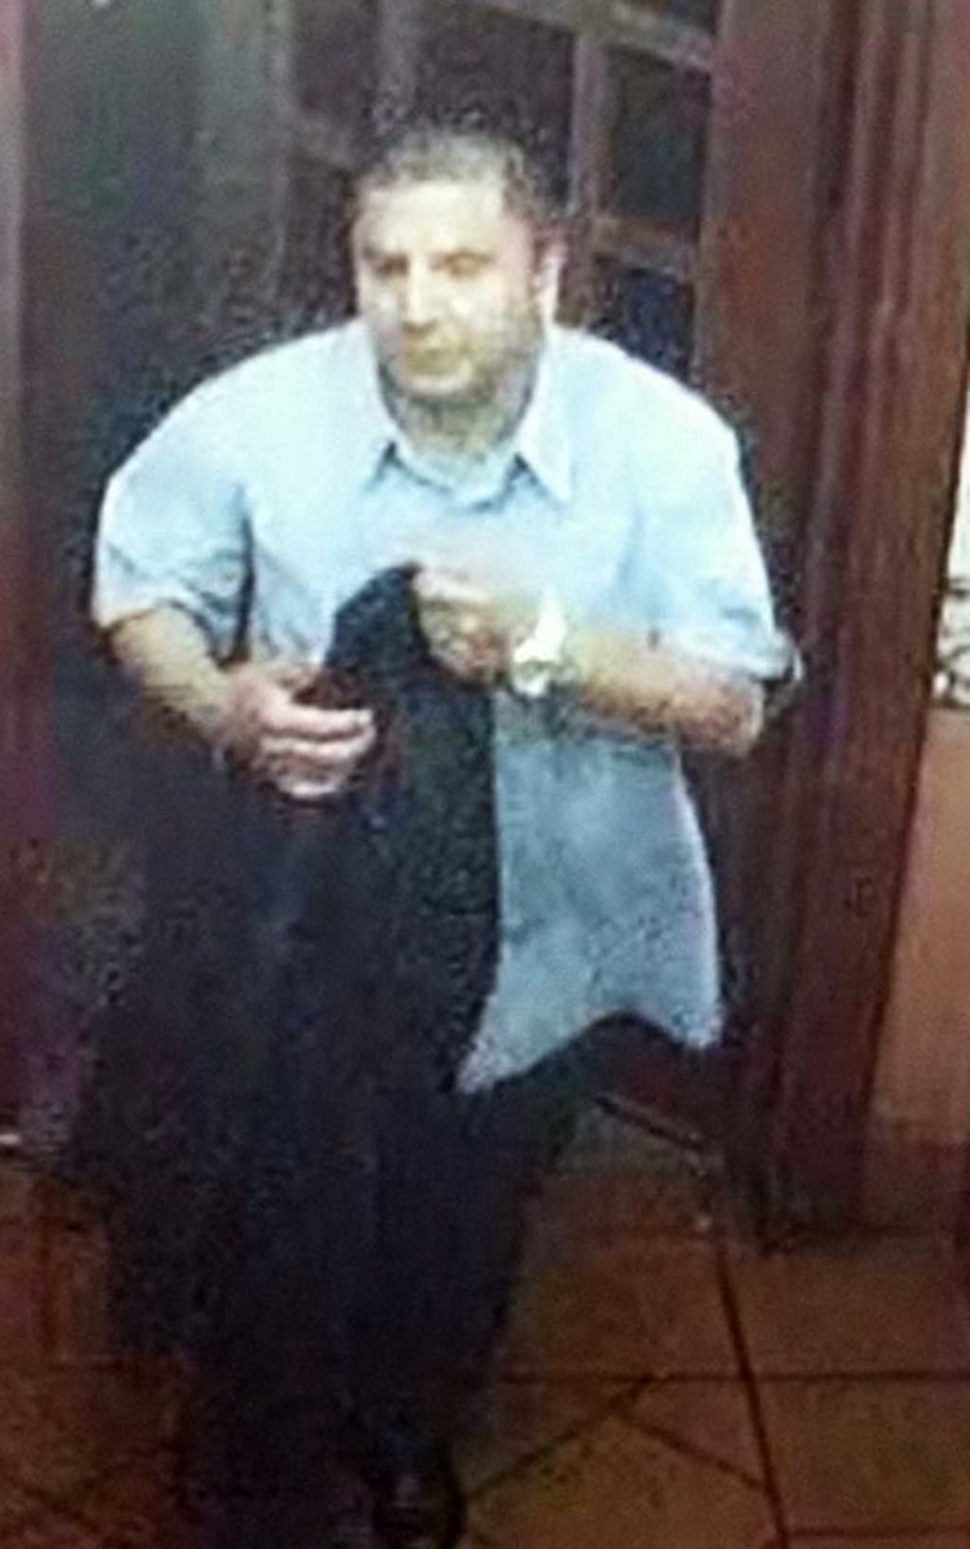 Suspect 1 - Hispanic Male, balding black hair, 5’5” - 5’8”, 180 - 200 lbs Late 40's 